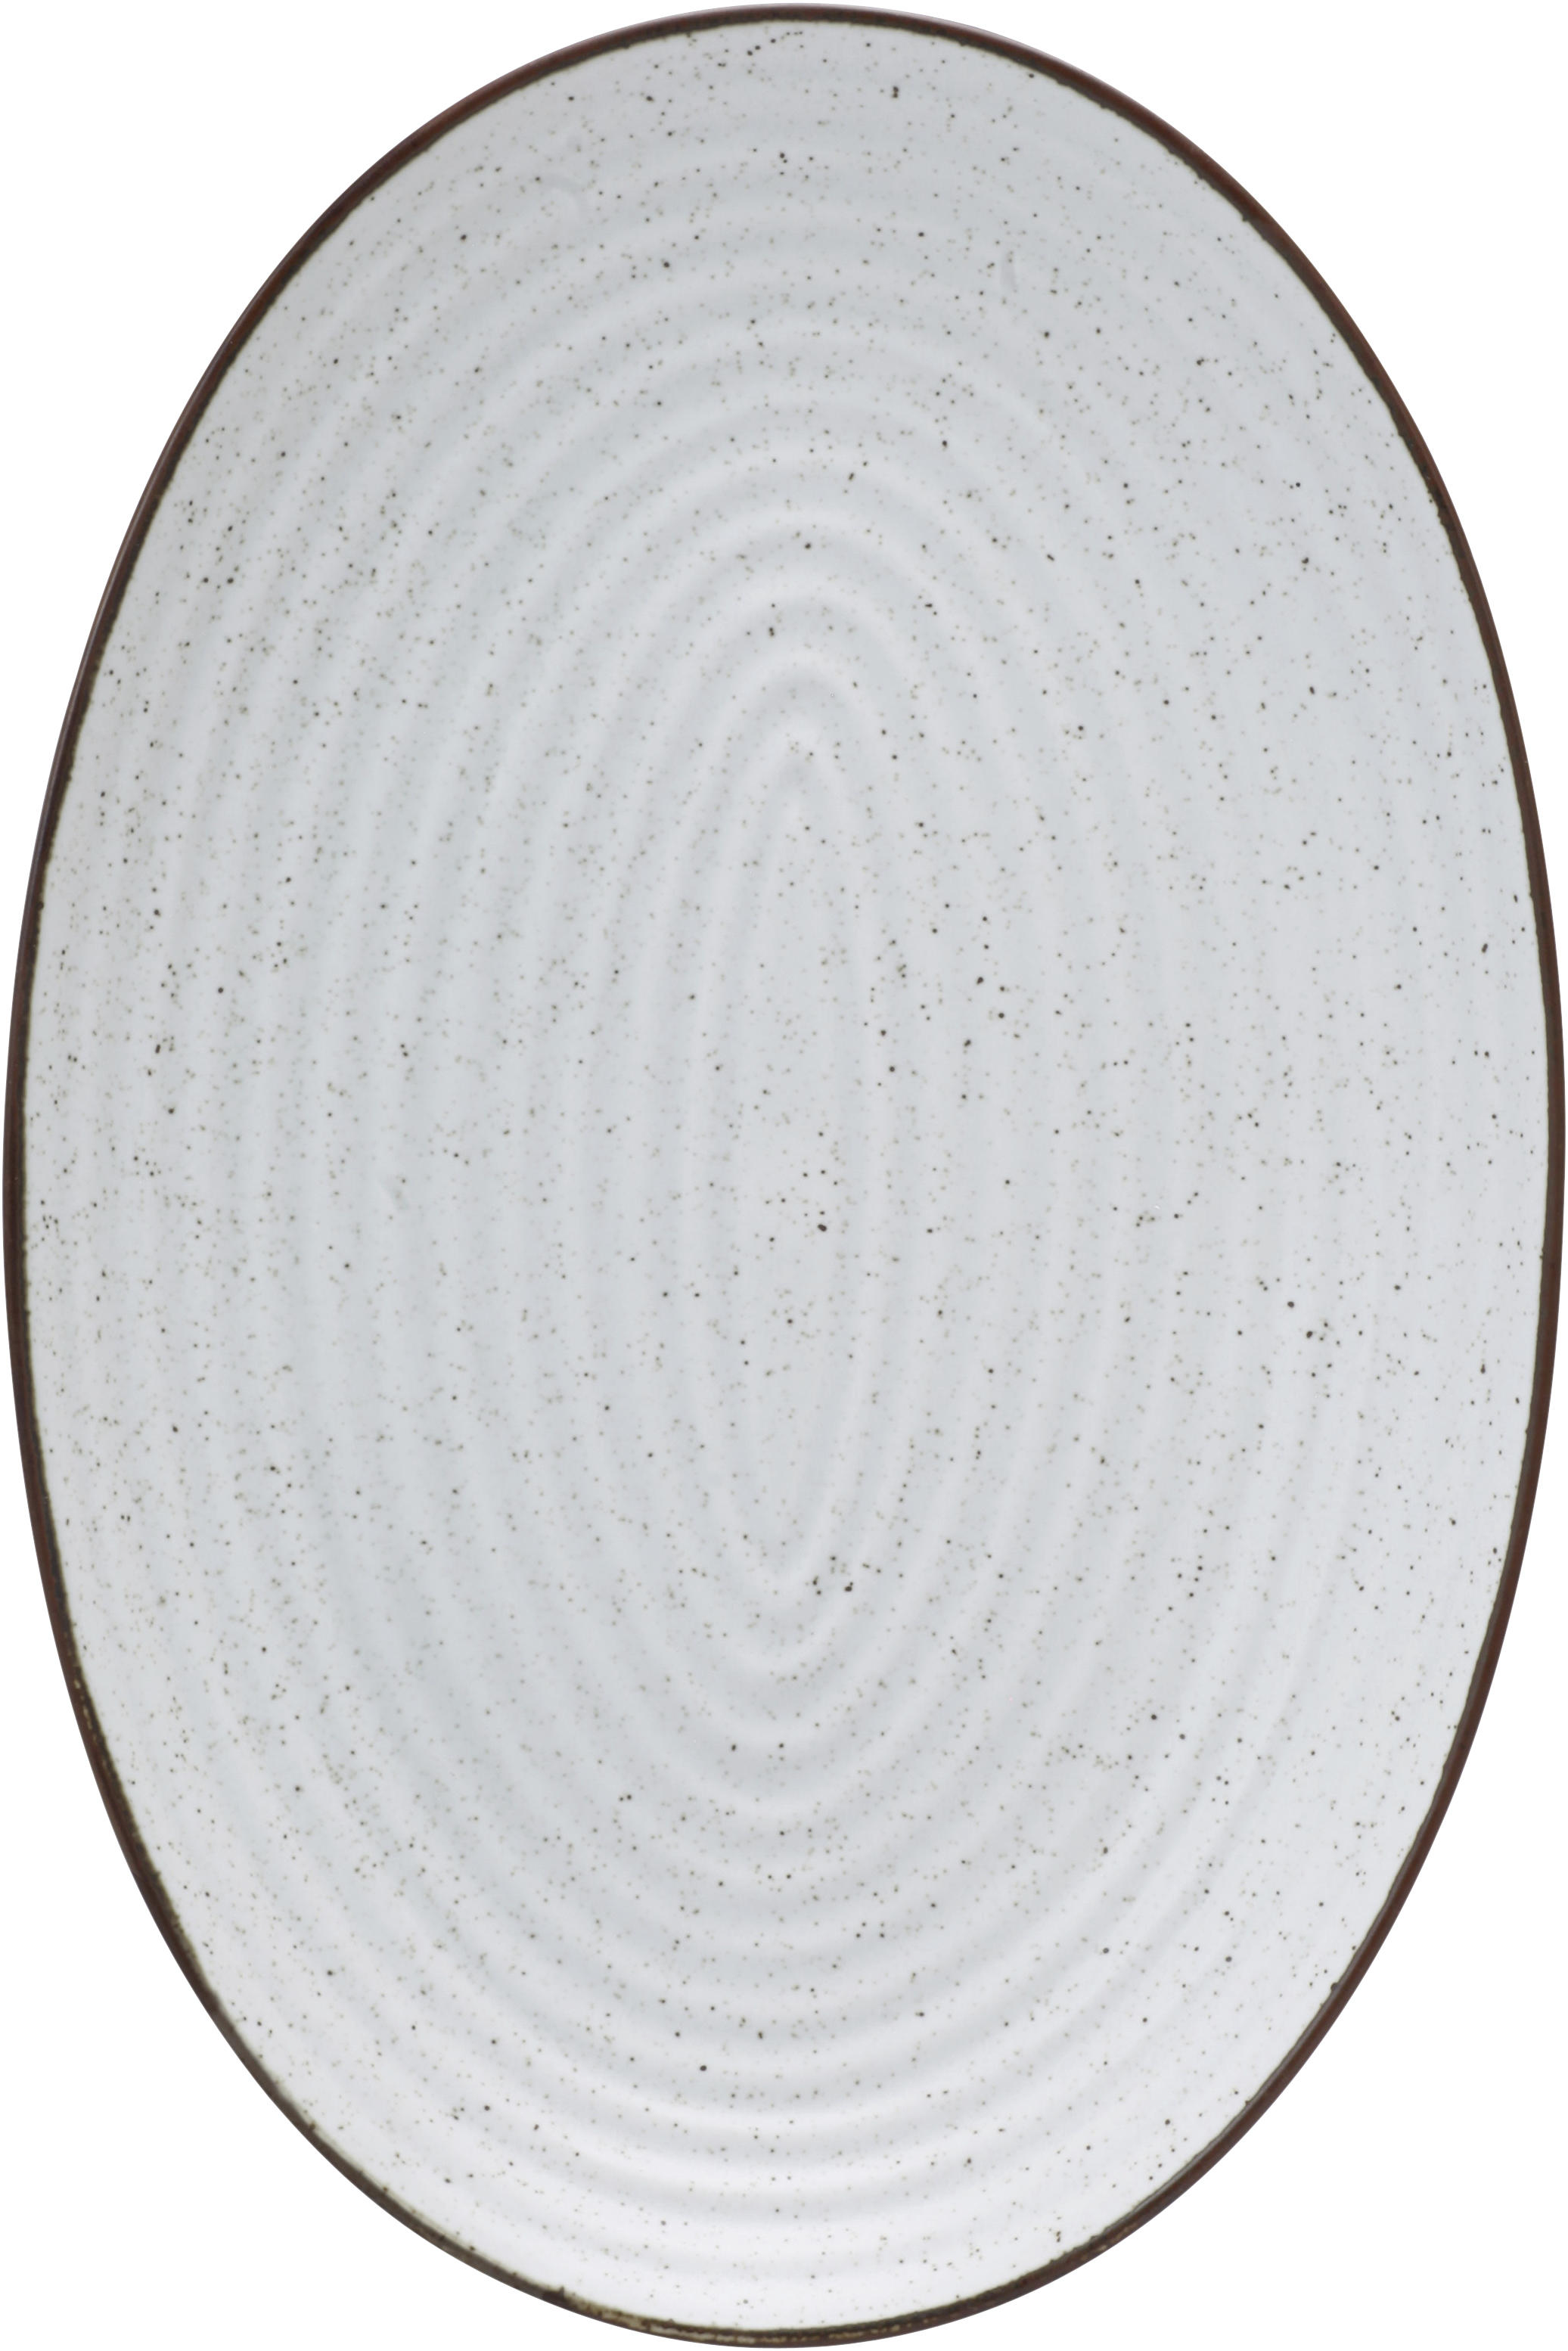 SERVIERPLATTE FARMHOUSE   21/31 cm   - Beige, Design, Keramik (21/31cm) - Landscape